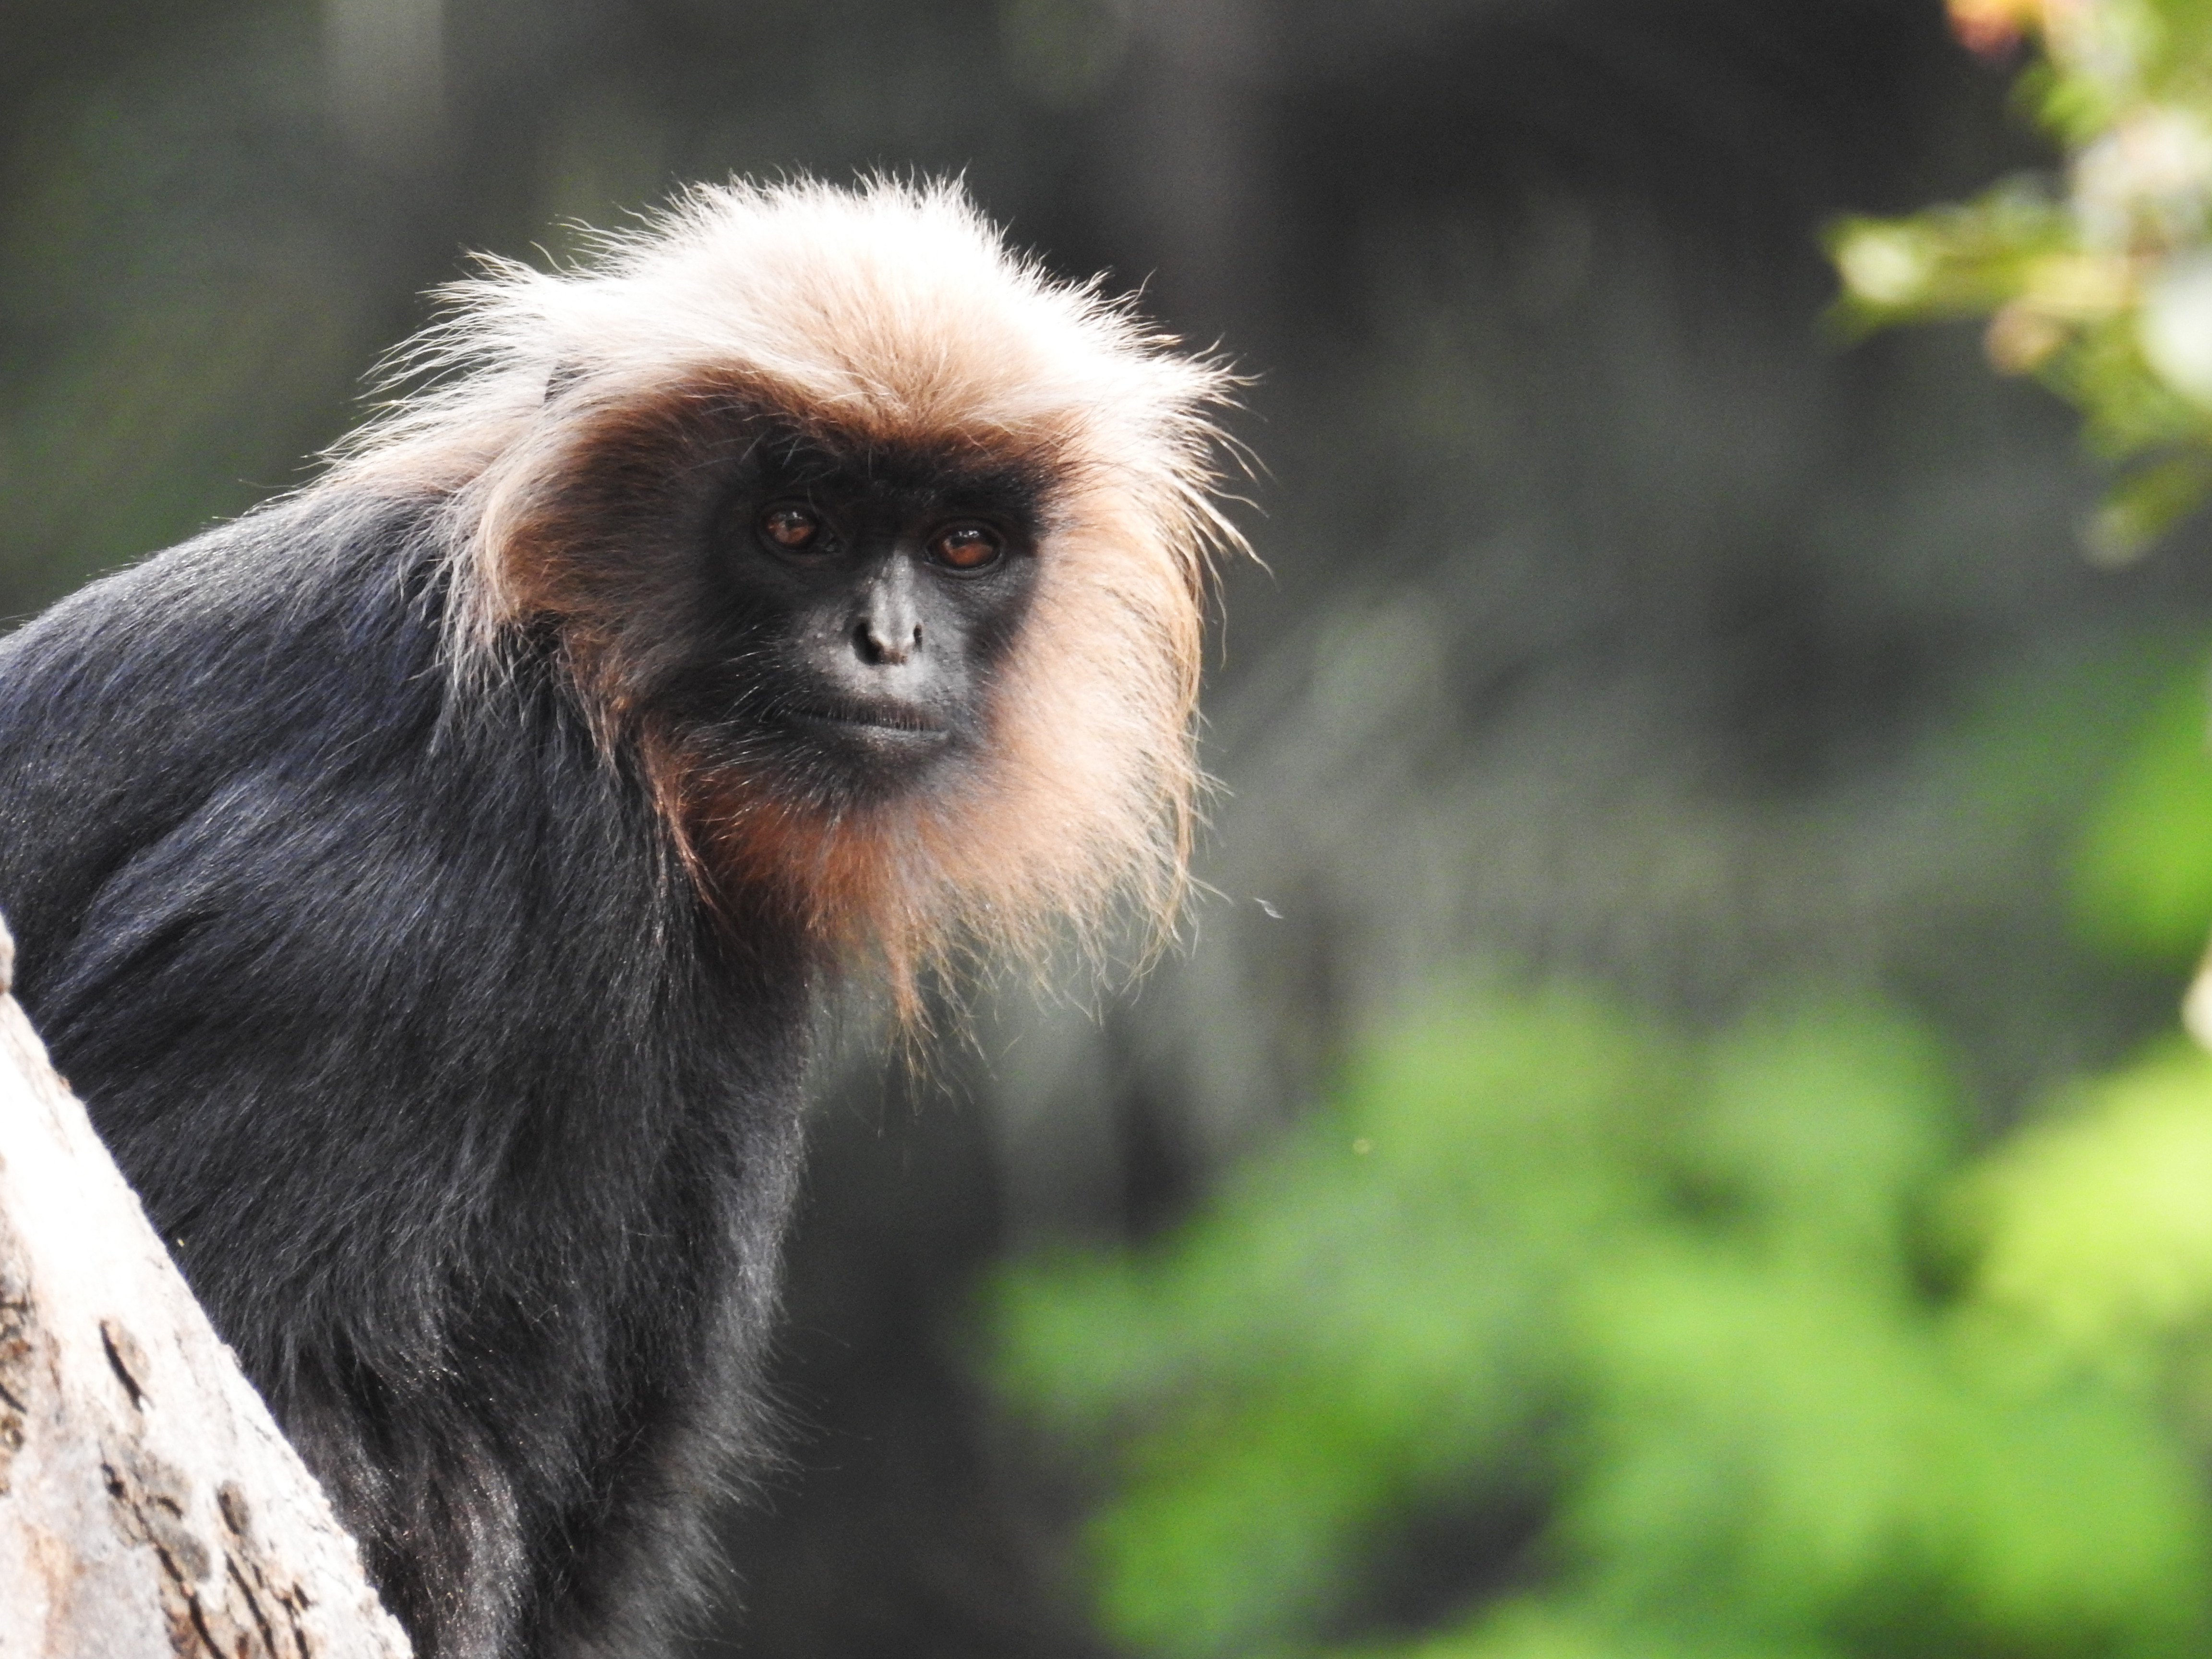 File:Monkey posing for camera.jpg - Wikimedia Commons